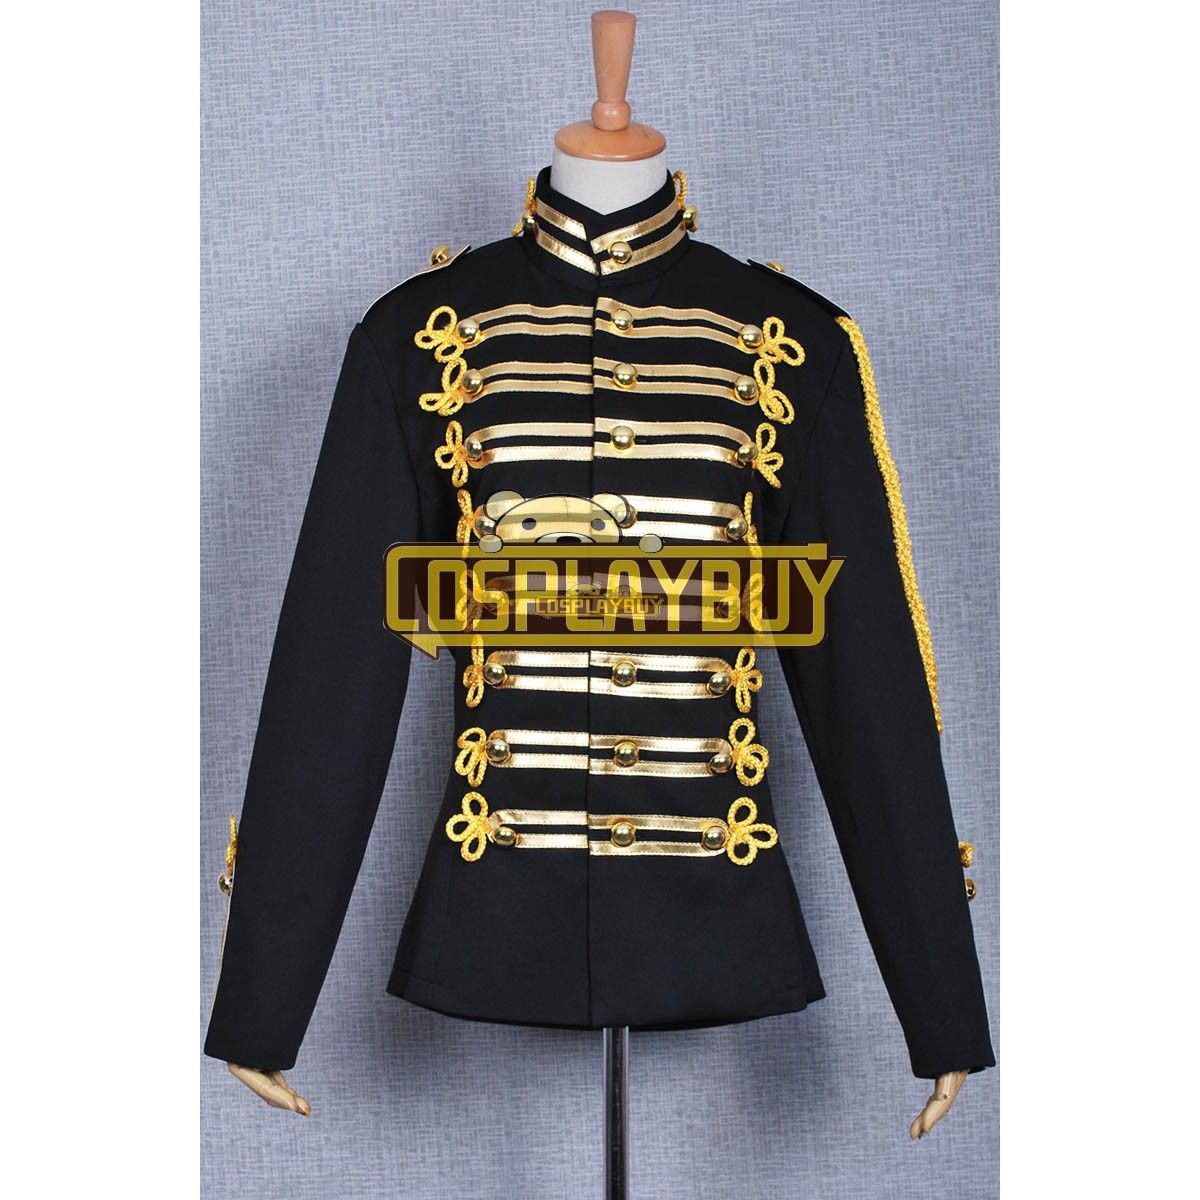 Michael Jackson Military Prince Gold Stripe Black Jacket Cosplay Costume